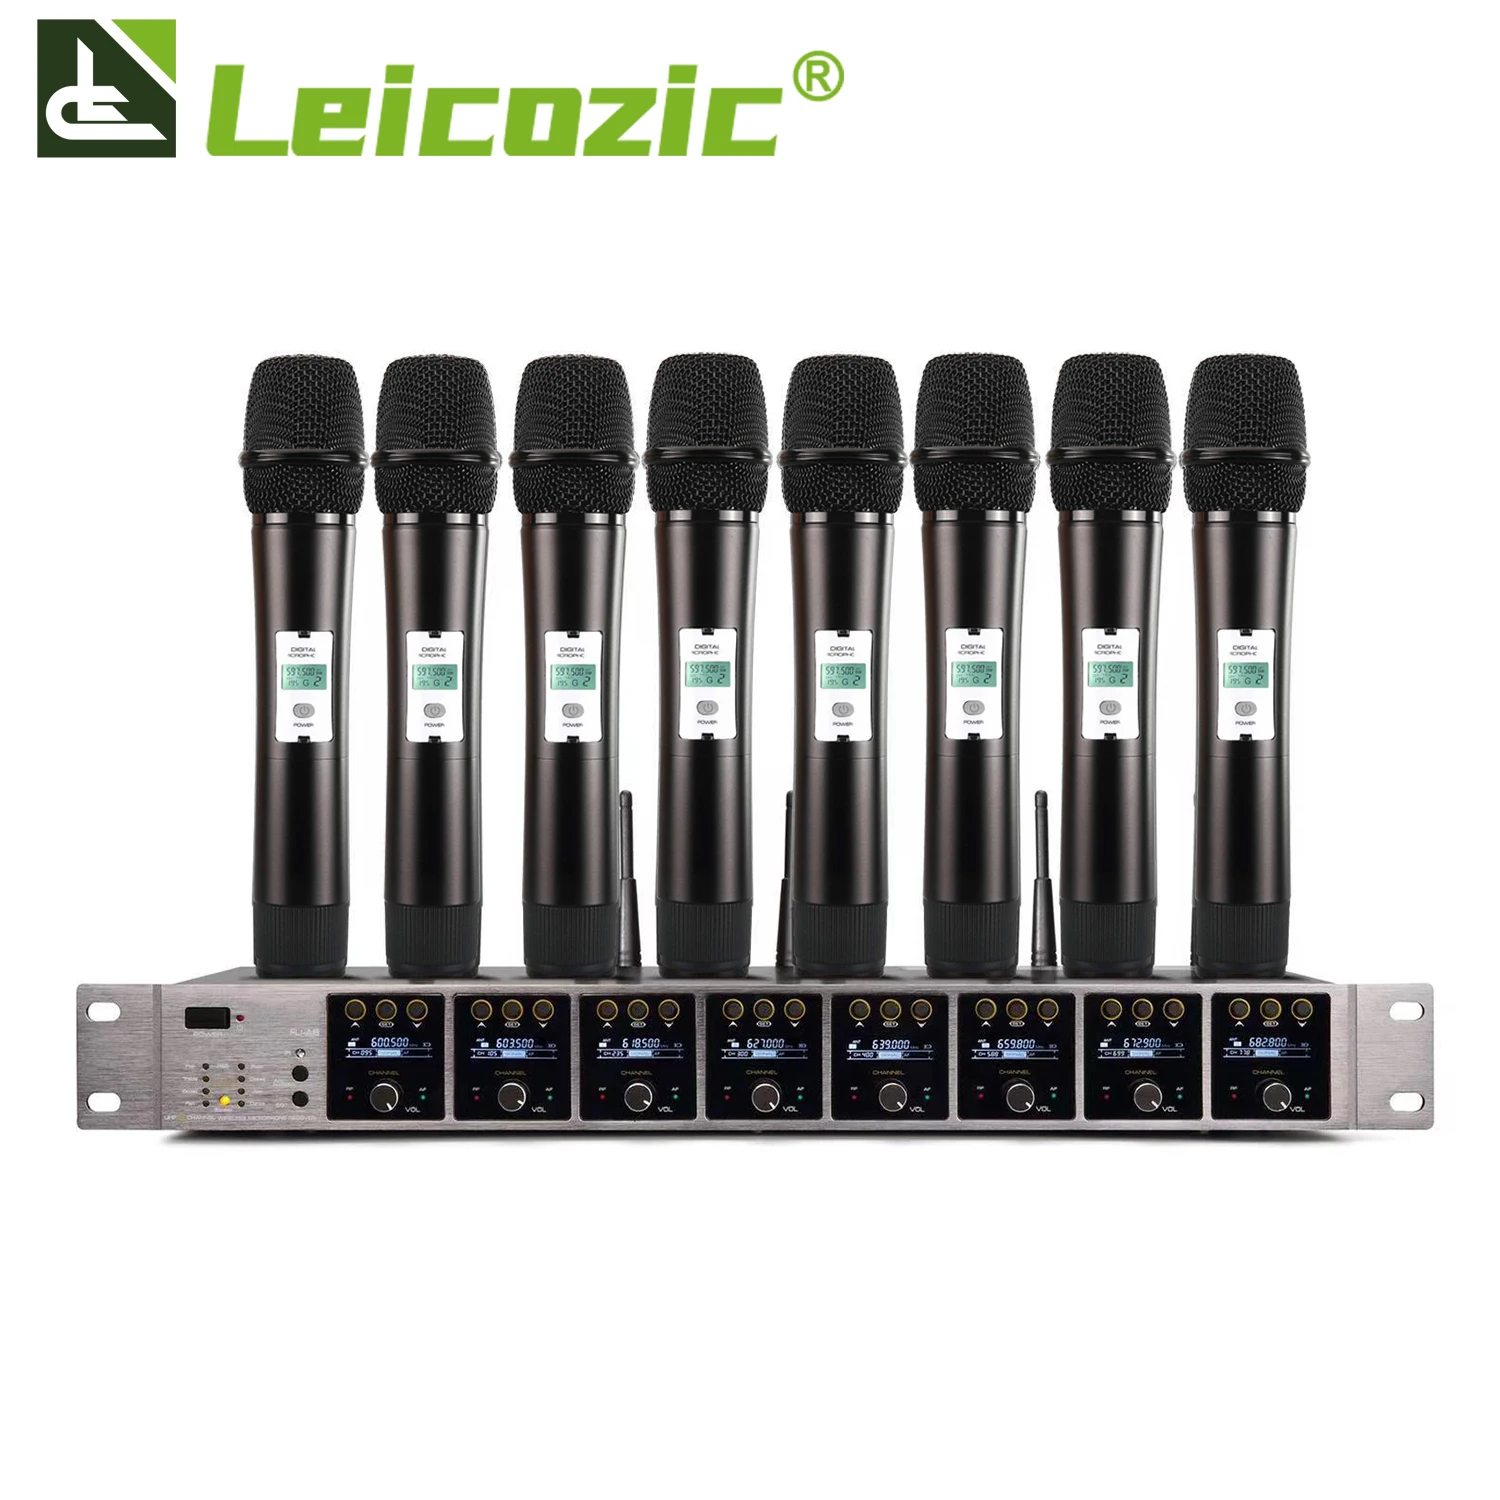 

Leicozic 8 Channel Digital Wireless Microphone Professional UHF Microfono Lapel Mikrofon Headset / Hand Microfone 1000 Frequency